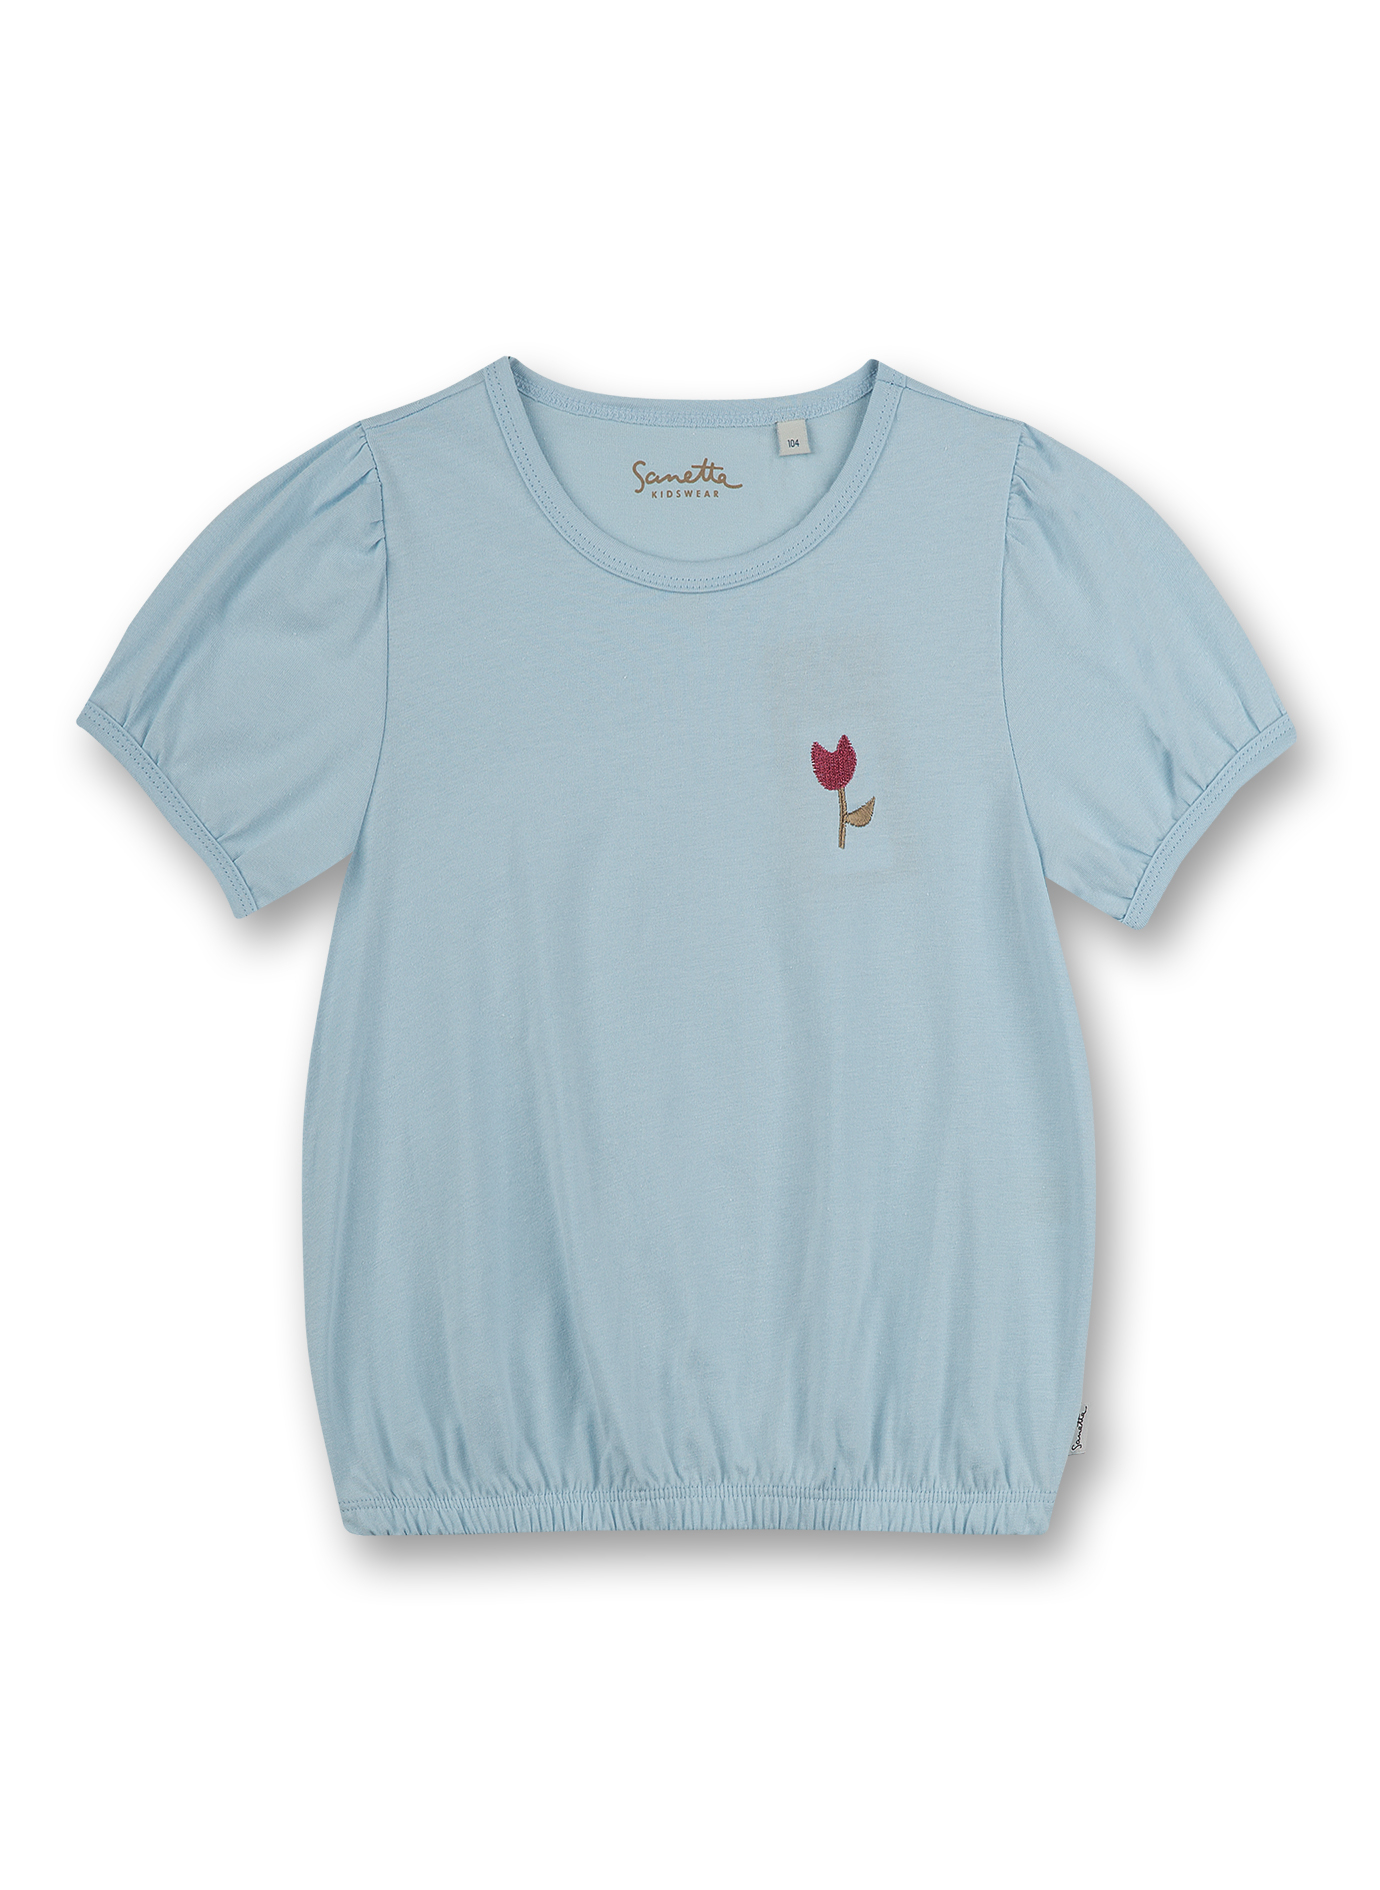 Mädchen T-Shirt Hellblau Flower